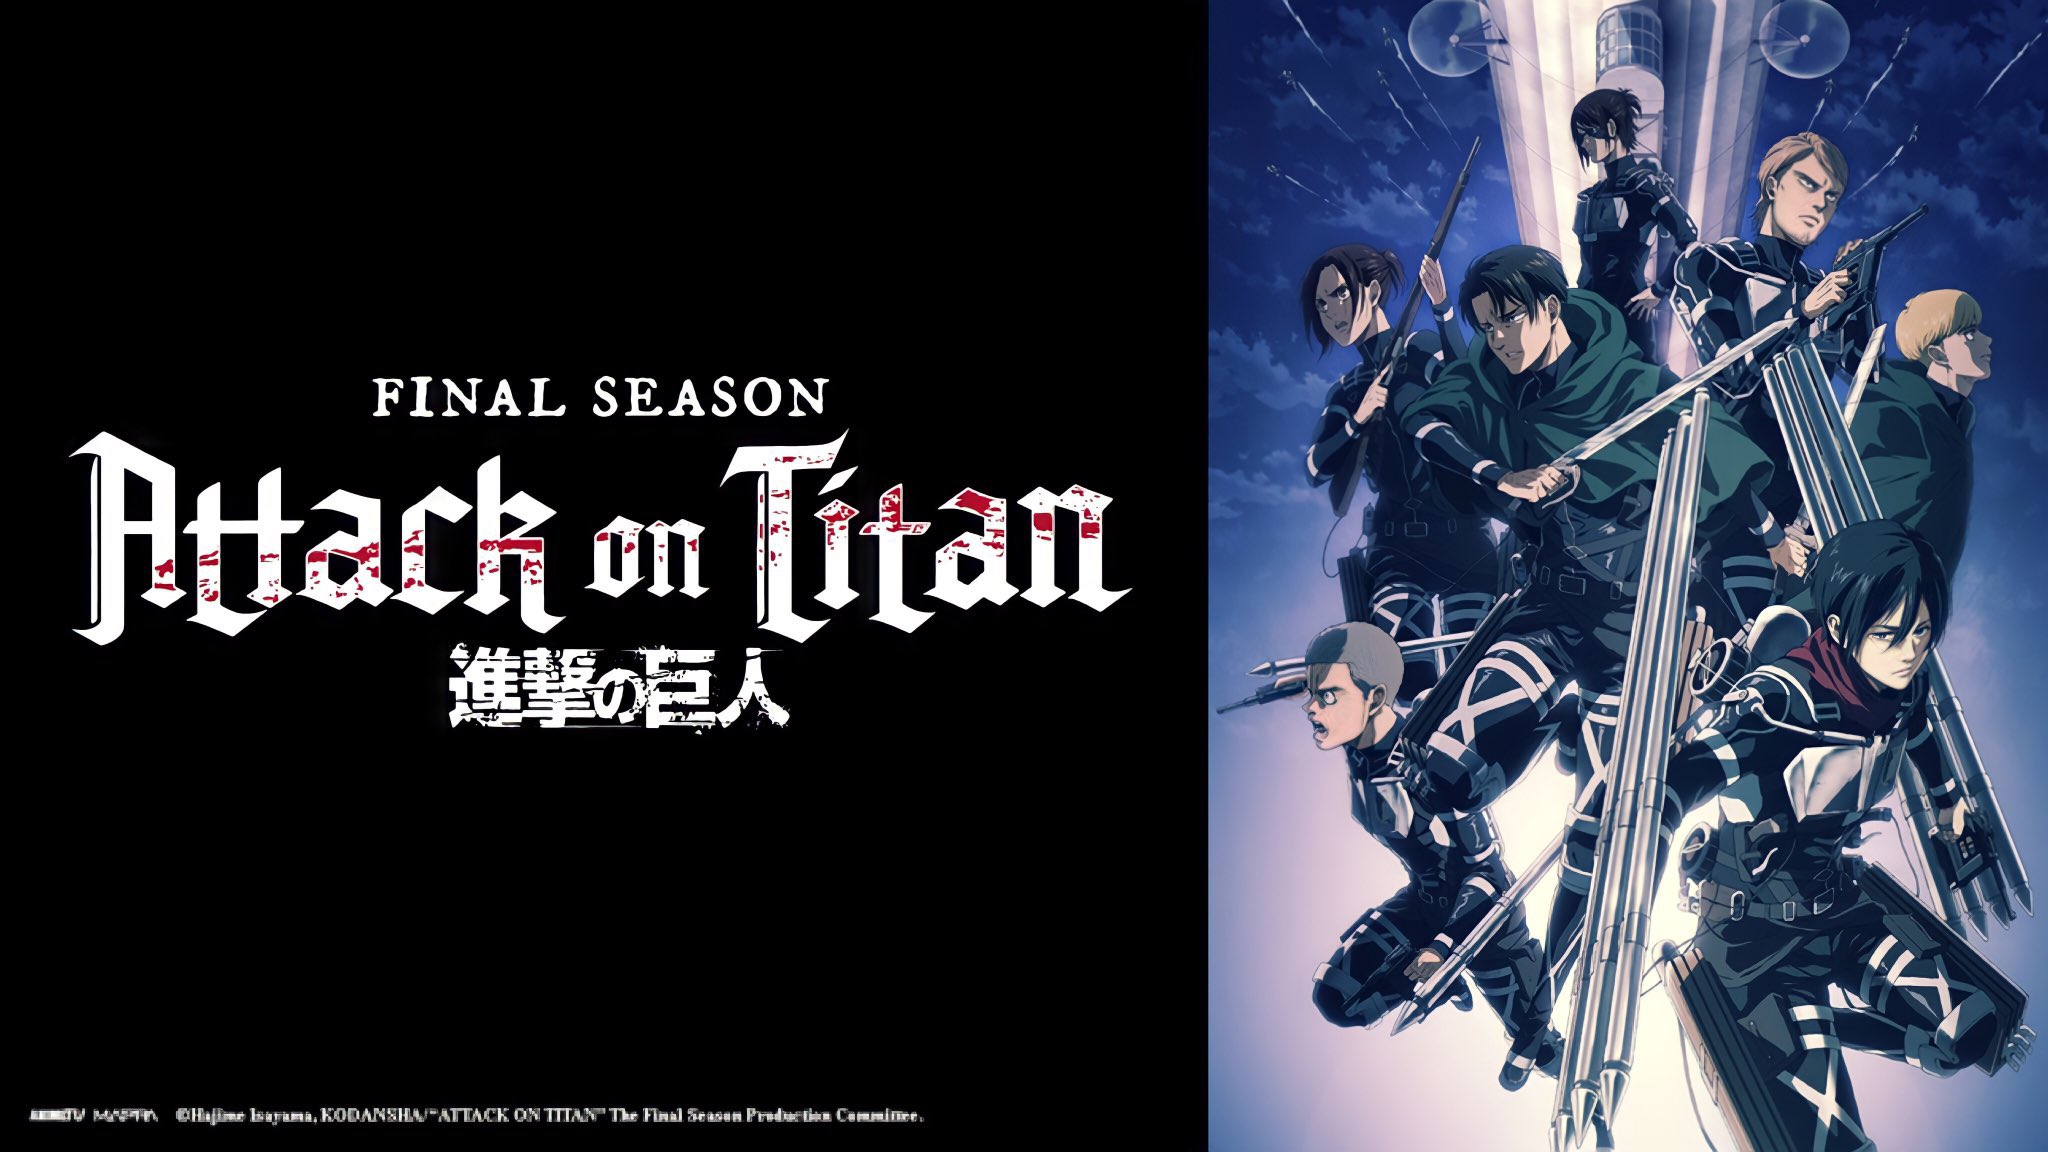 Chuva de Nanquim on X: A temporada final de Attack on Titan (Shingeki no  Kyojin / Ataque dos Titãs) deverá ter 16 episódios no total.   / X